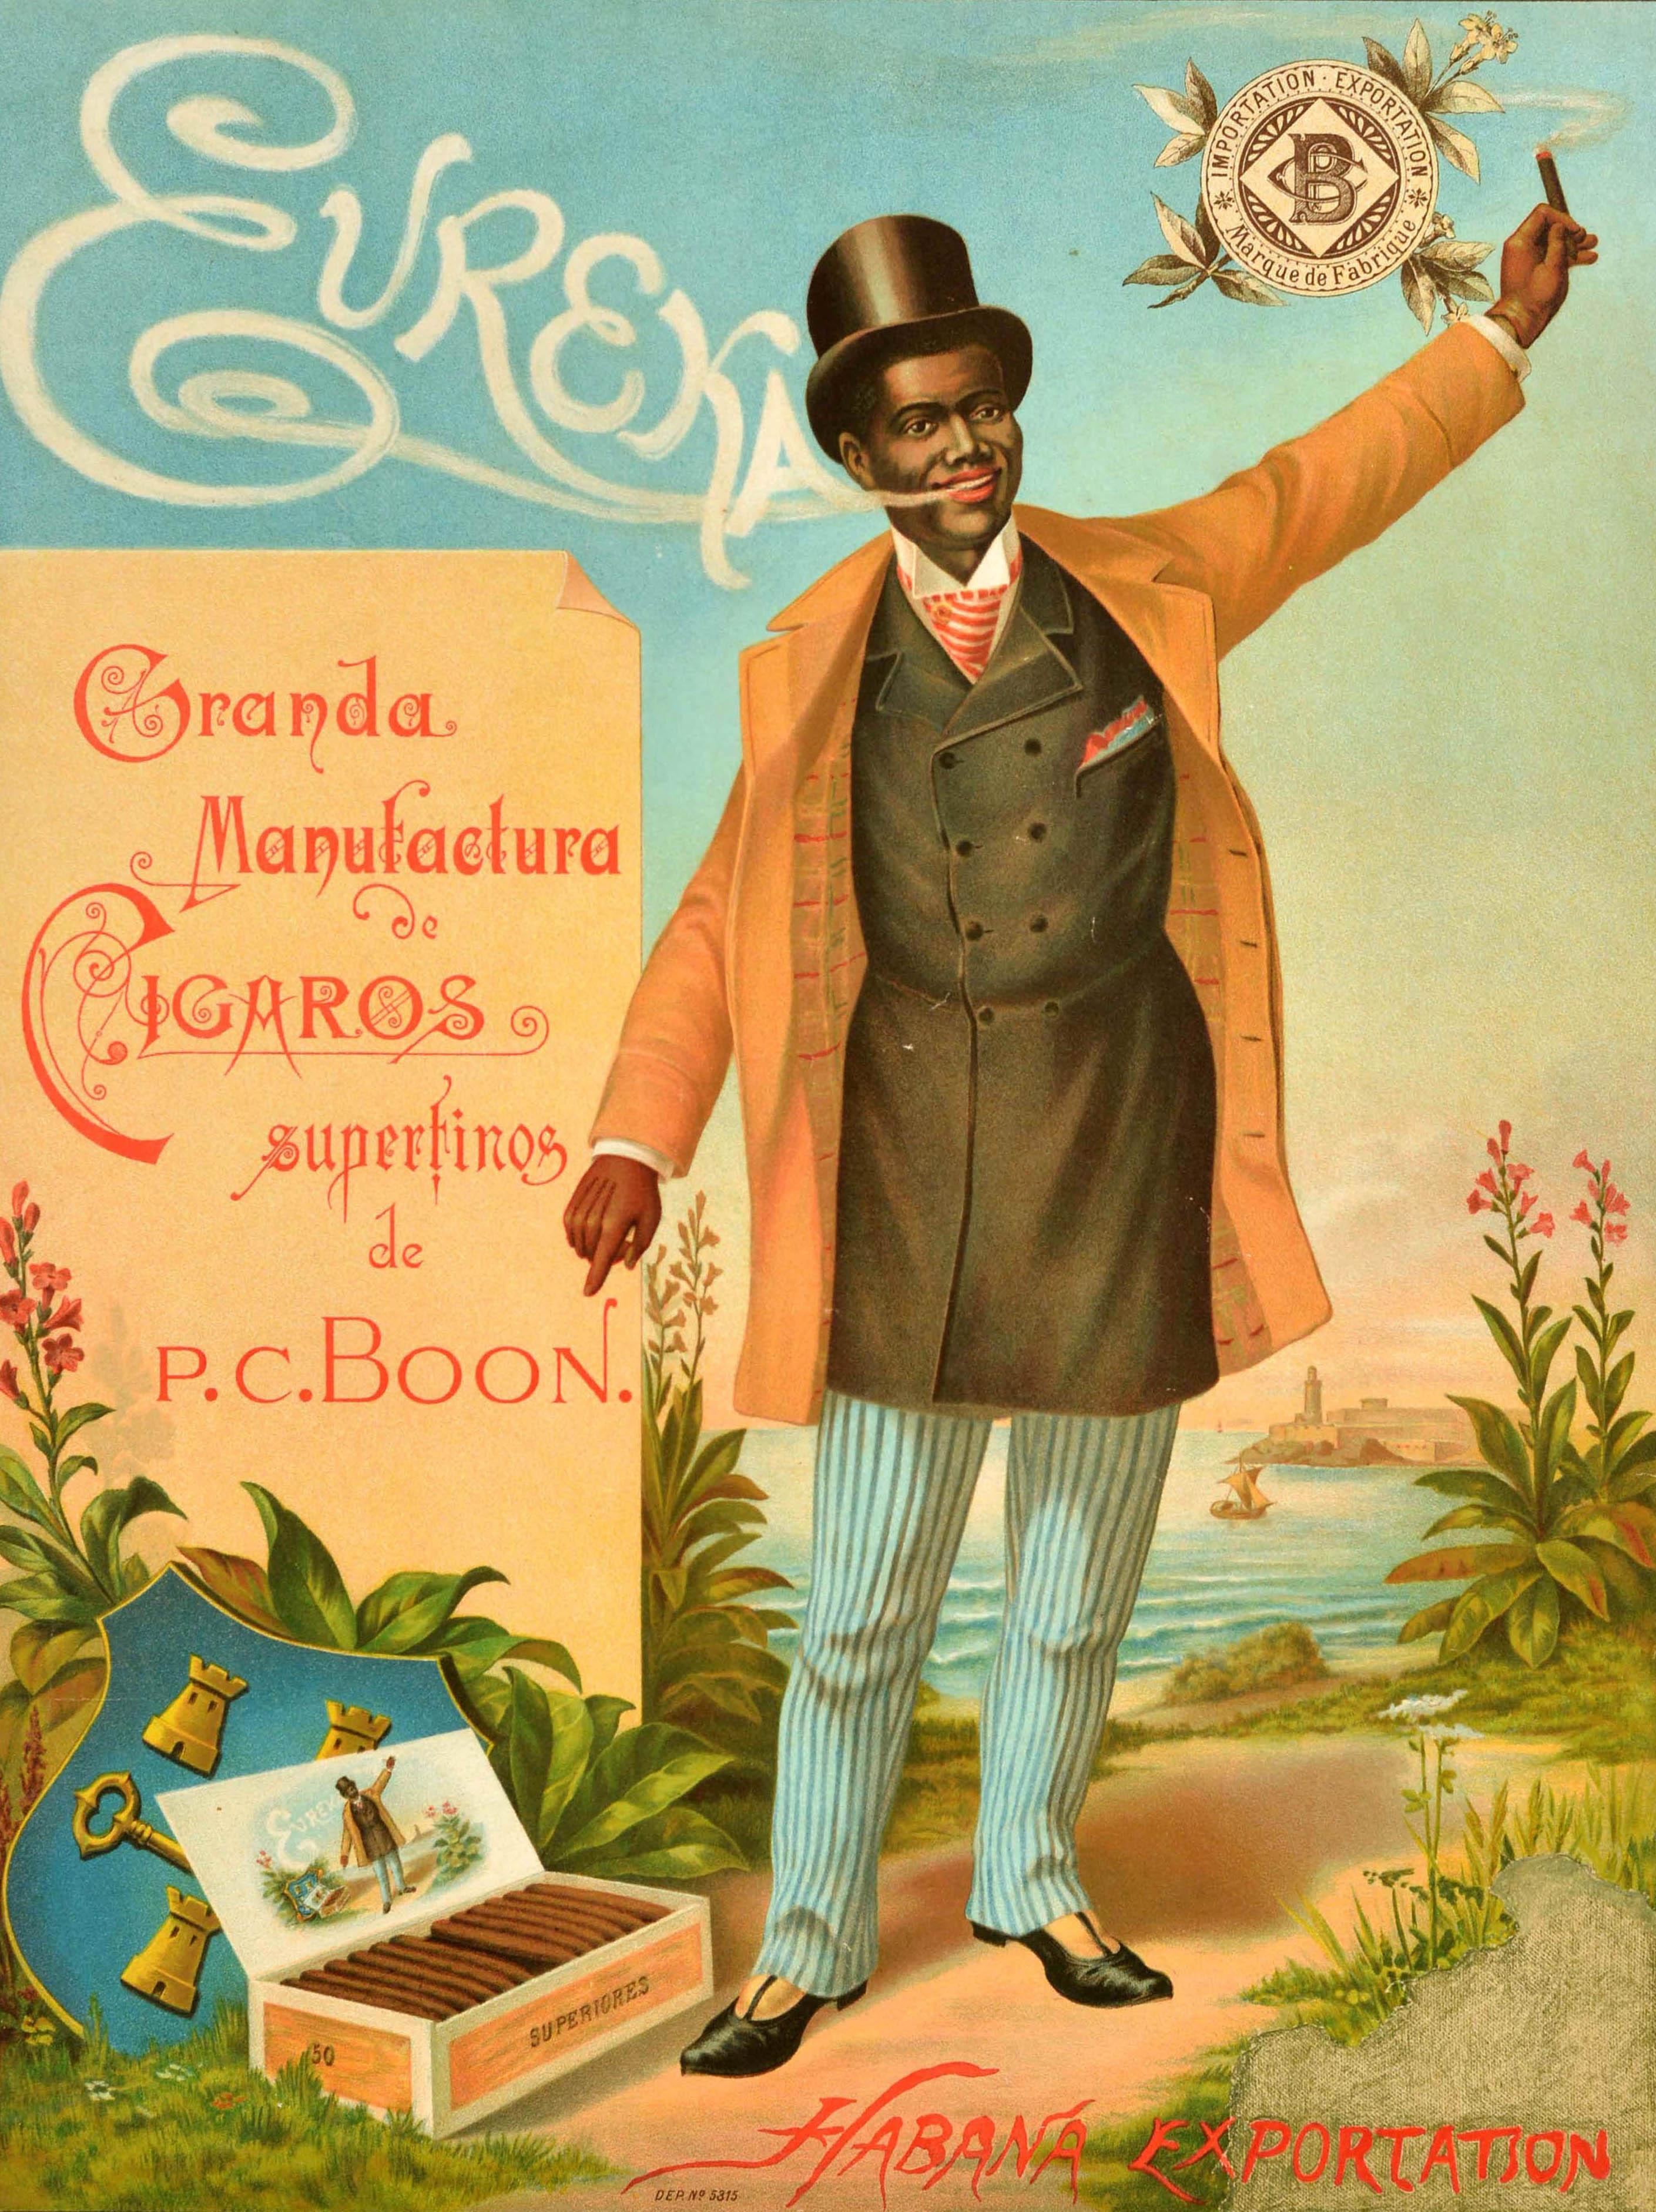 Original antique advertising poster for Eureka superfine Cigars manufactured by P.C. Boon Havana Exportation - Granda Manufactura de Cigaros superfinos de P.C. Boon Habana Exportation - featuring a smiling man wearing a top hat, striped tie, jacket,